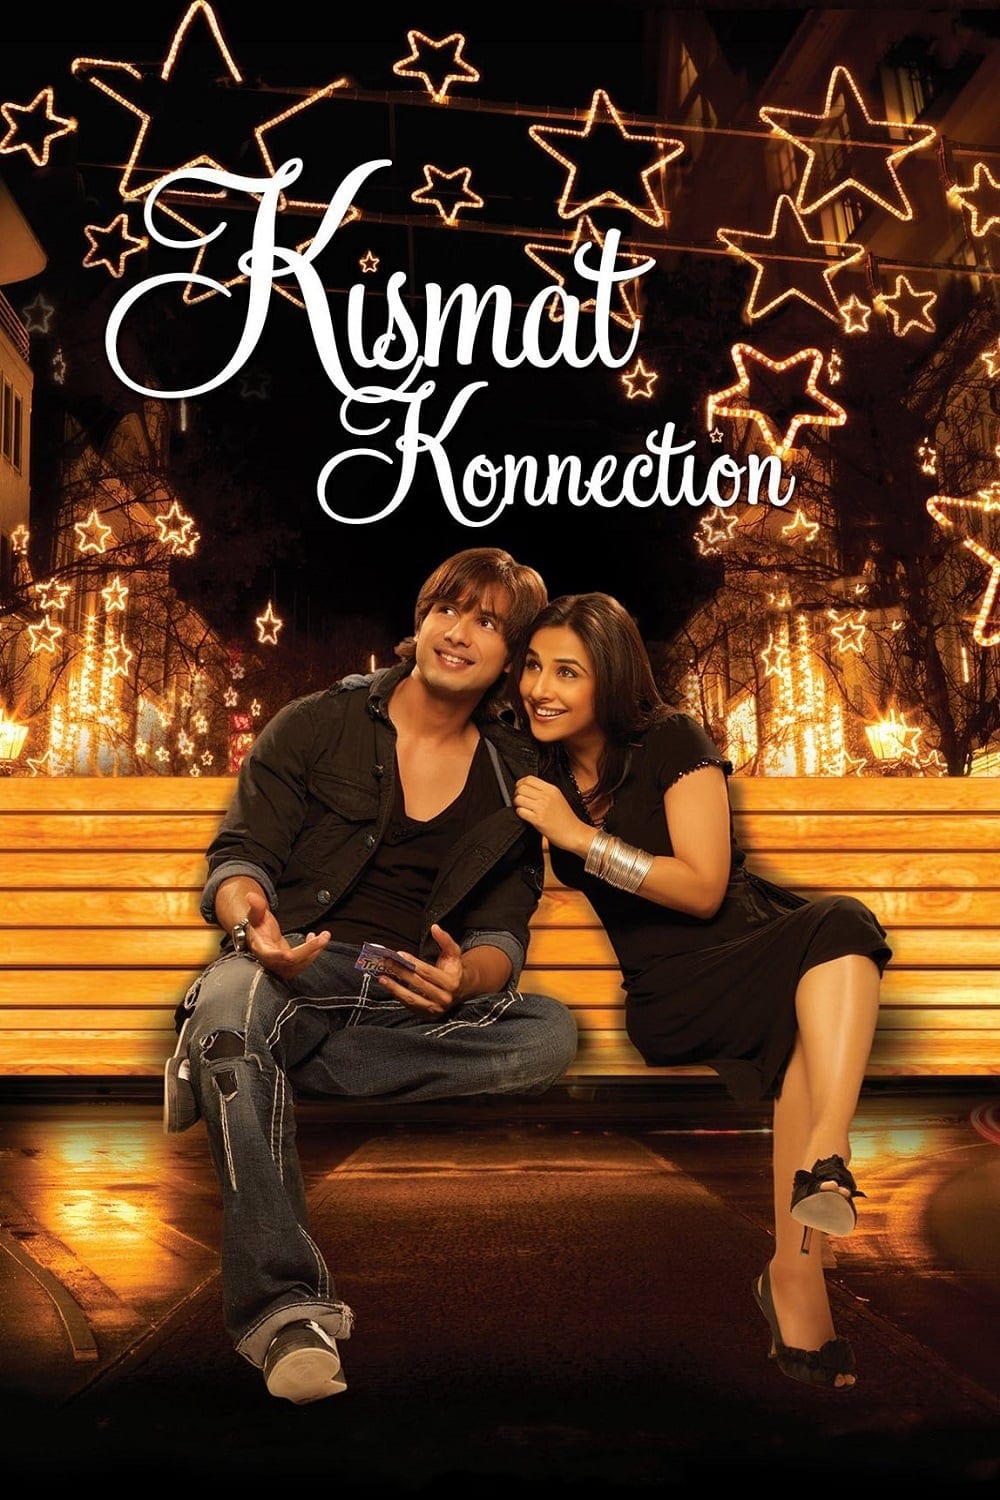 Poster for the movie "Kismat Konnection"